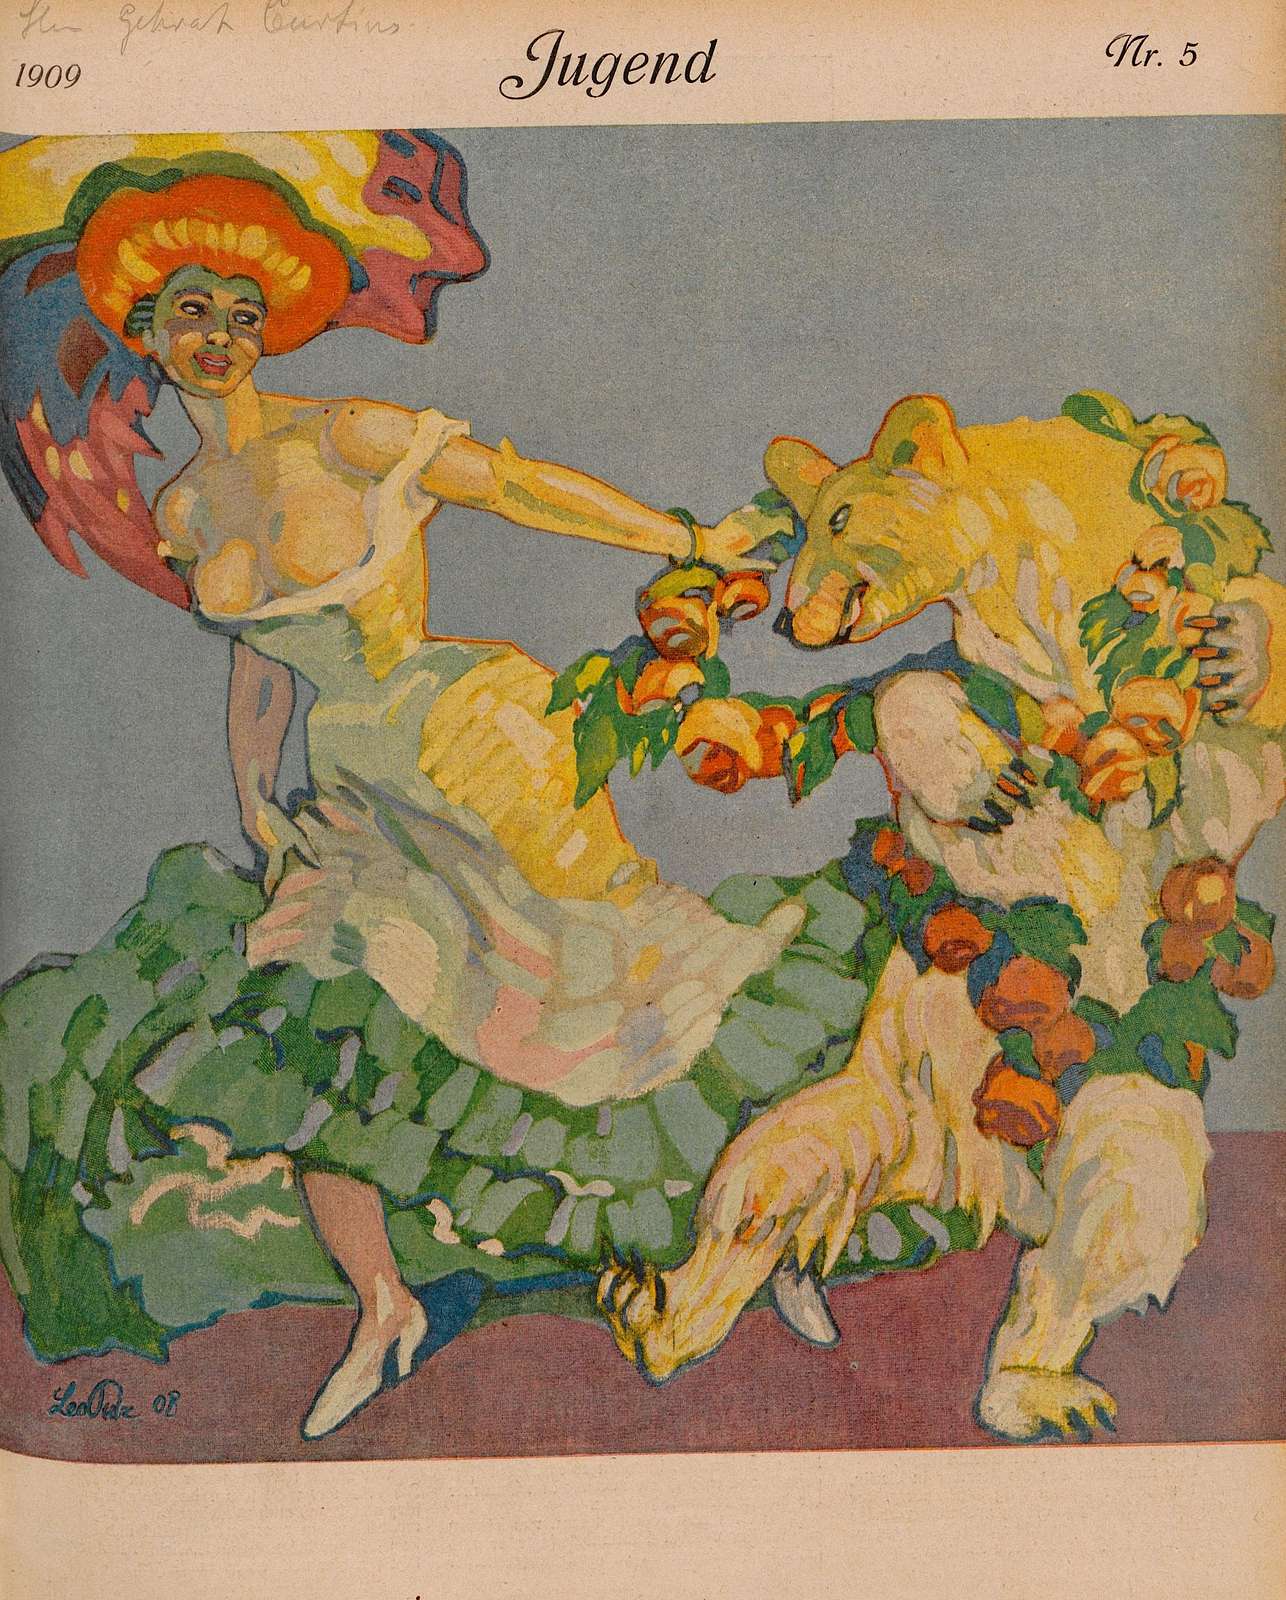 Bildende Kunst, Putz, Leo, (1869-1940), Malerei, Schloss Seefeld,  (Seefeld Schloss), Öl auf Leinwand, 84 x 74 cm, Schüller Galerie, München  Stockfotografie - Alamy